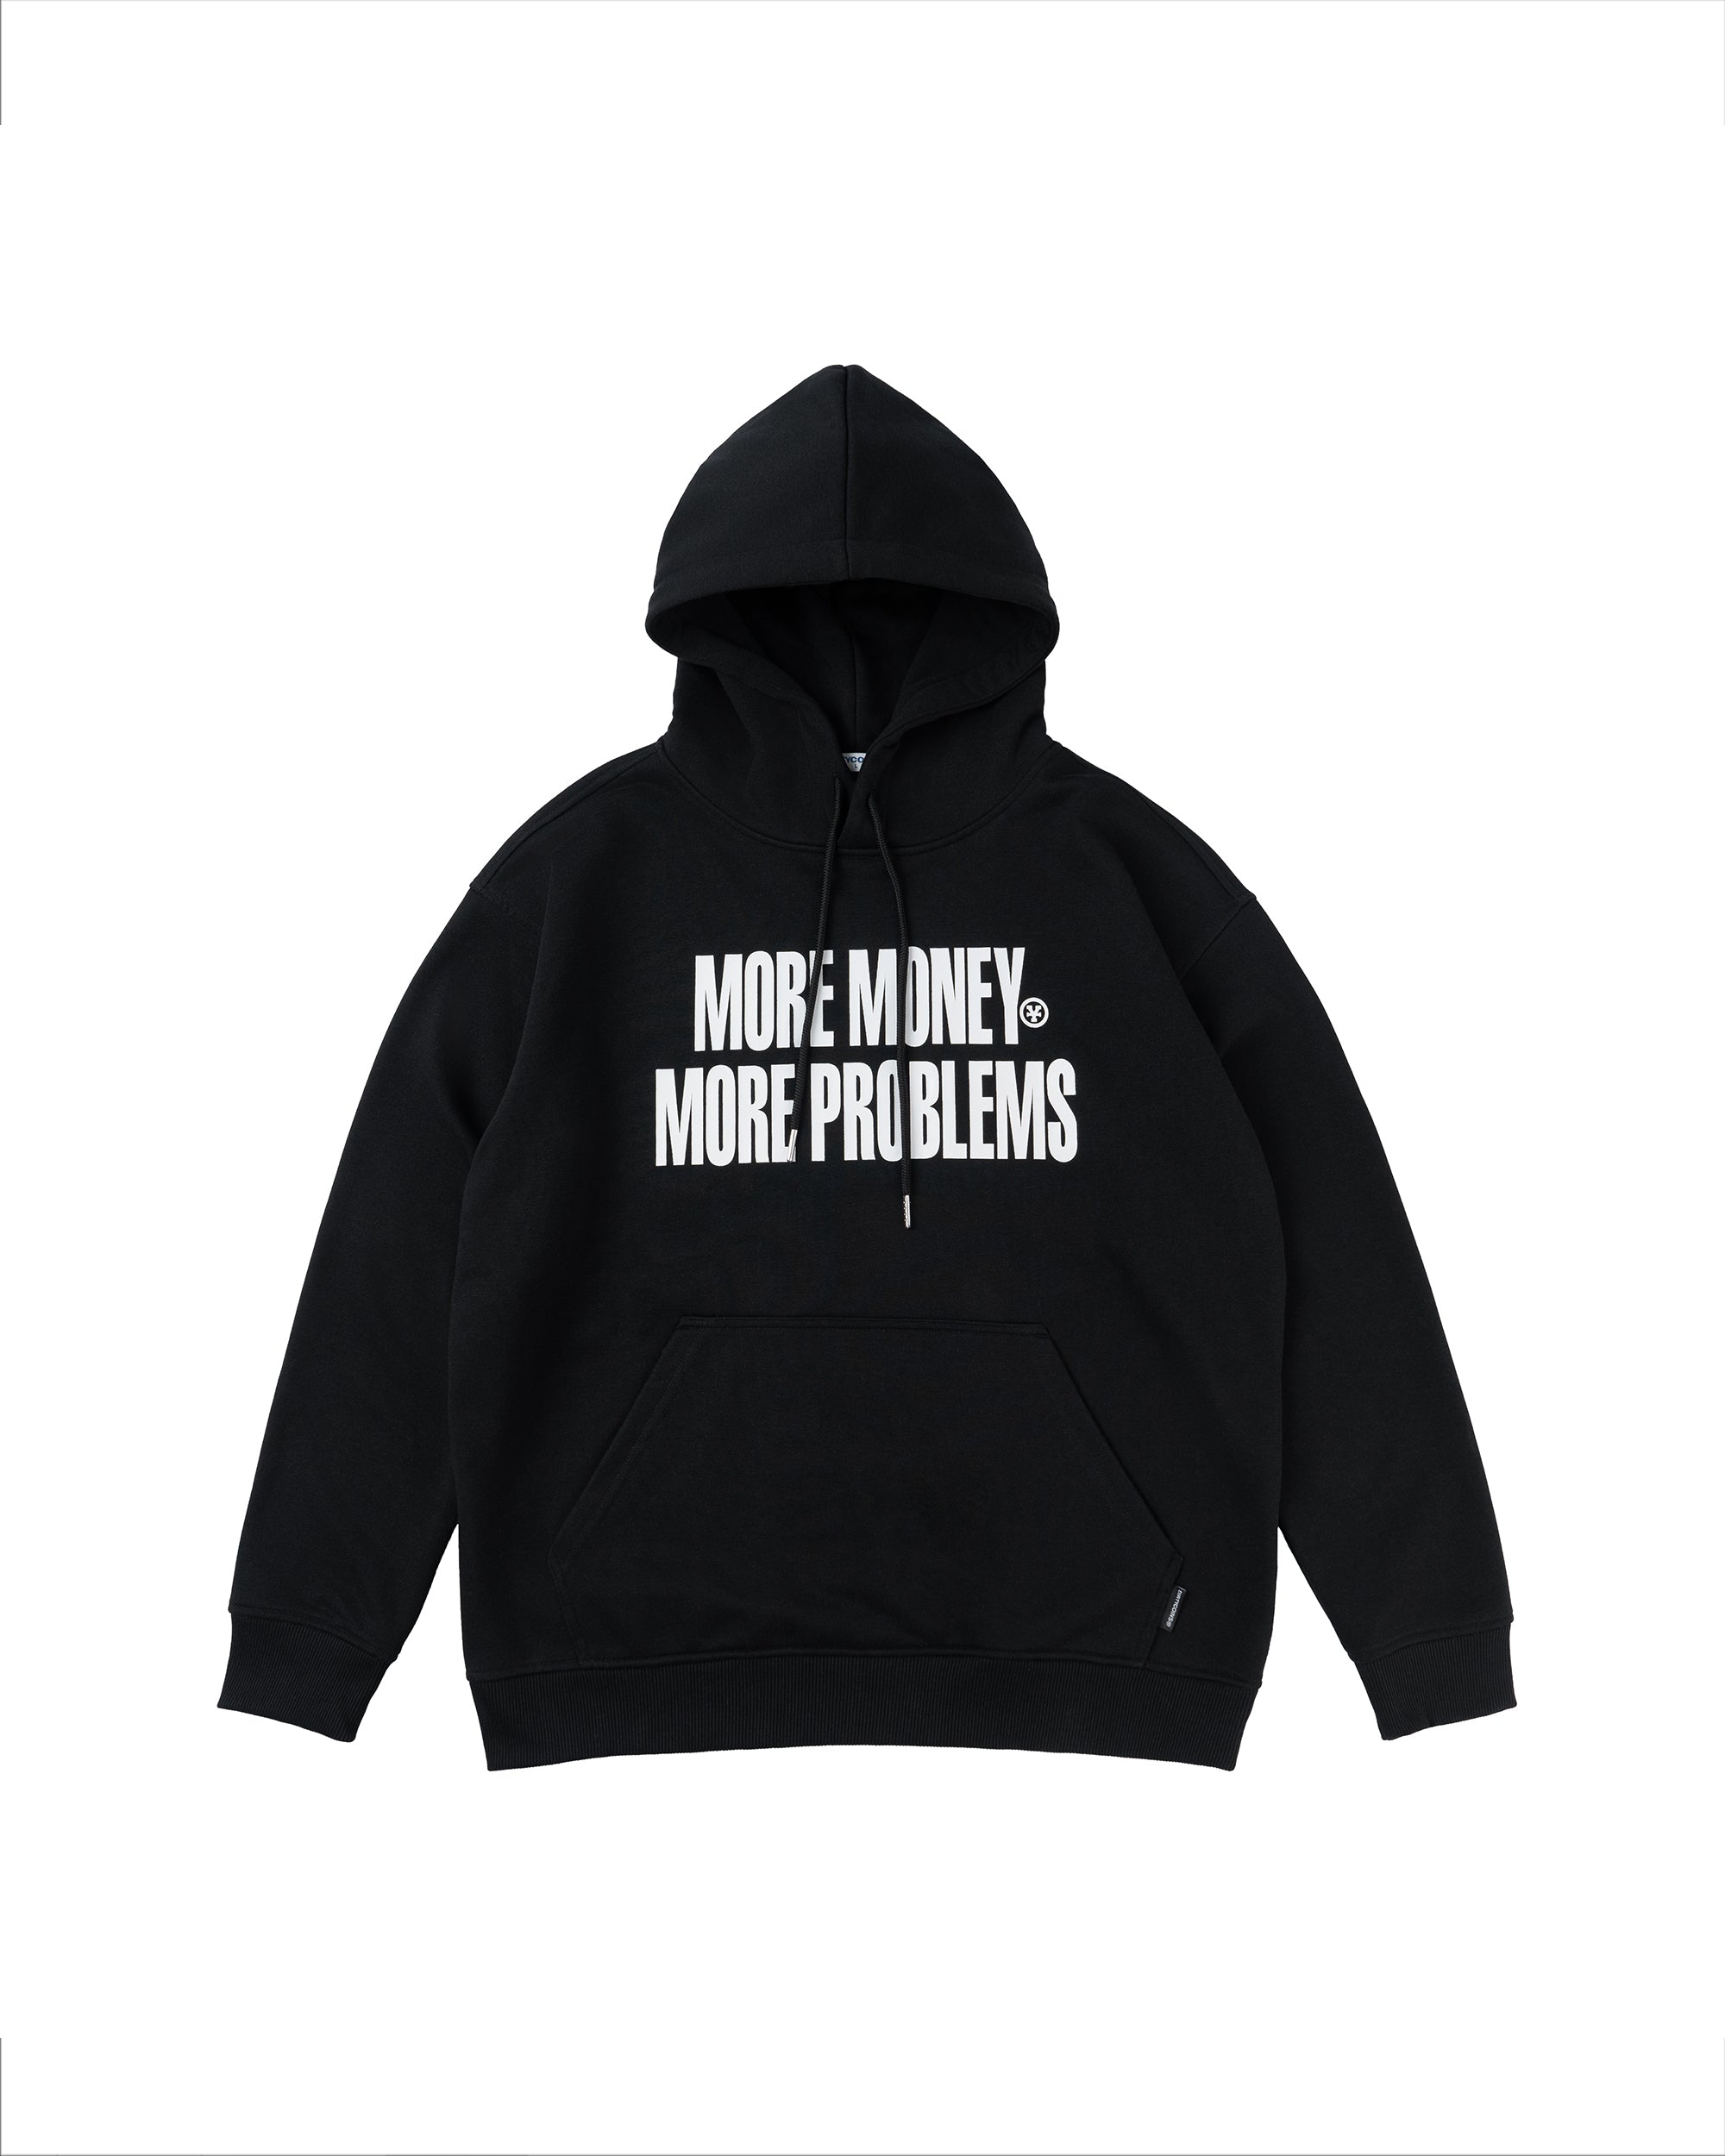 More Money More Problems Hoodie - Black